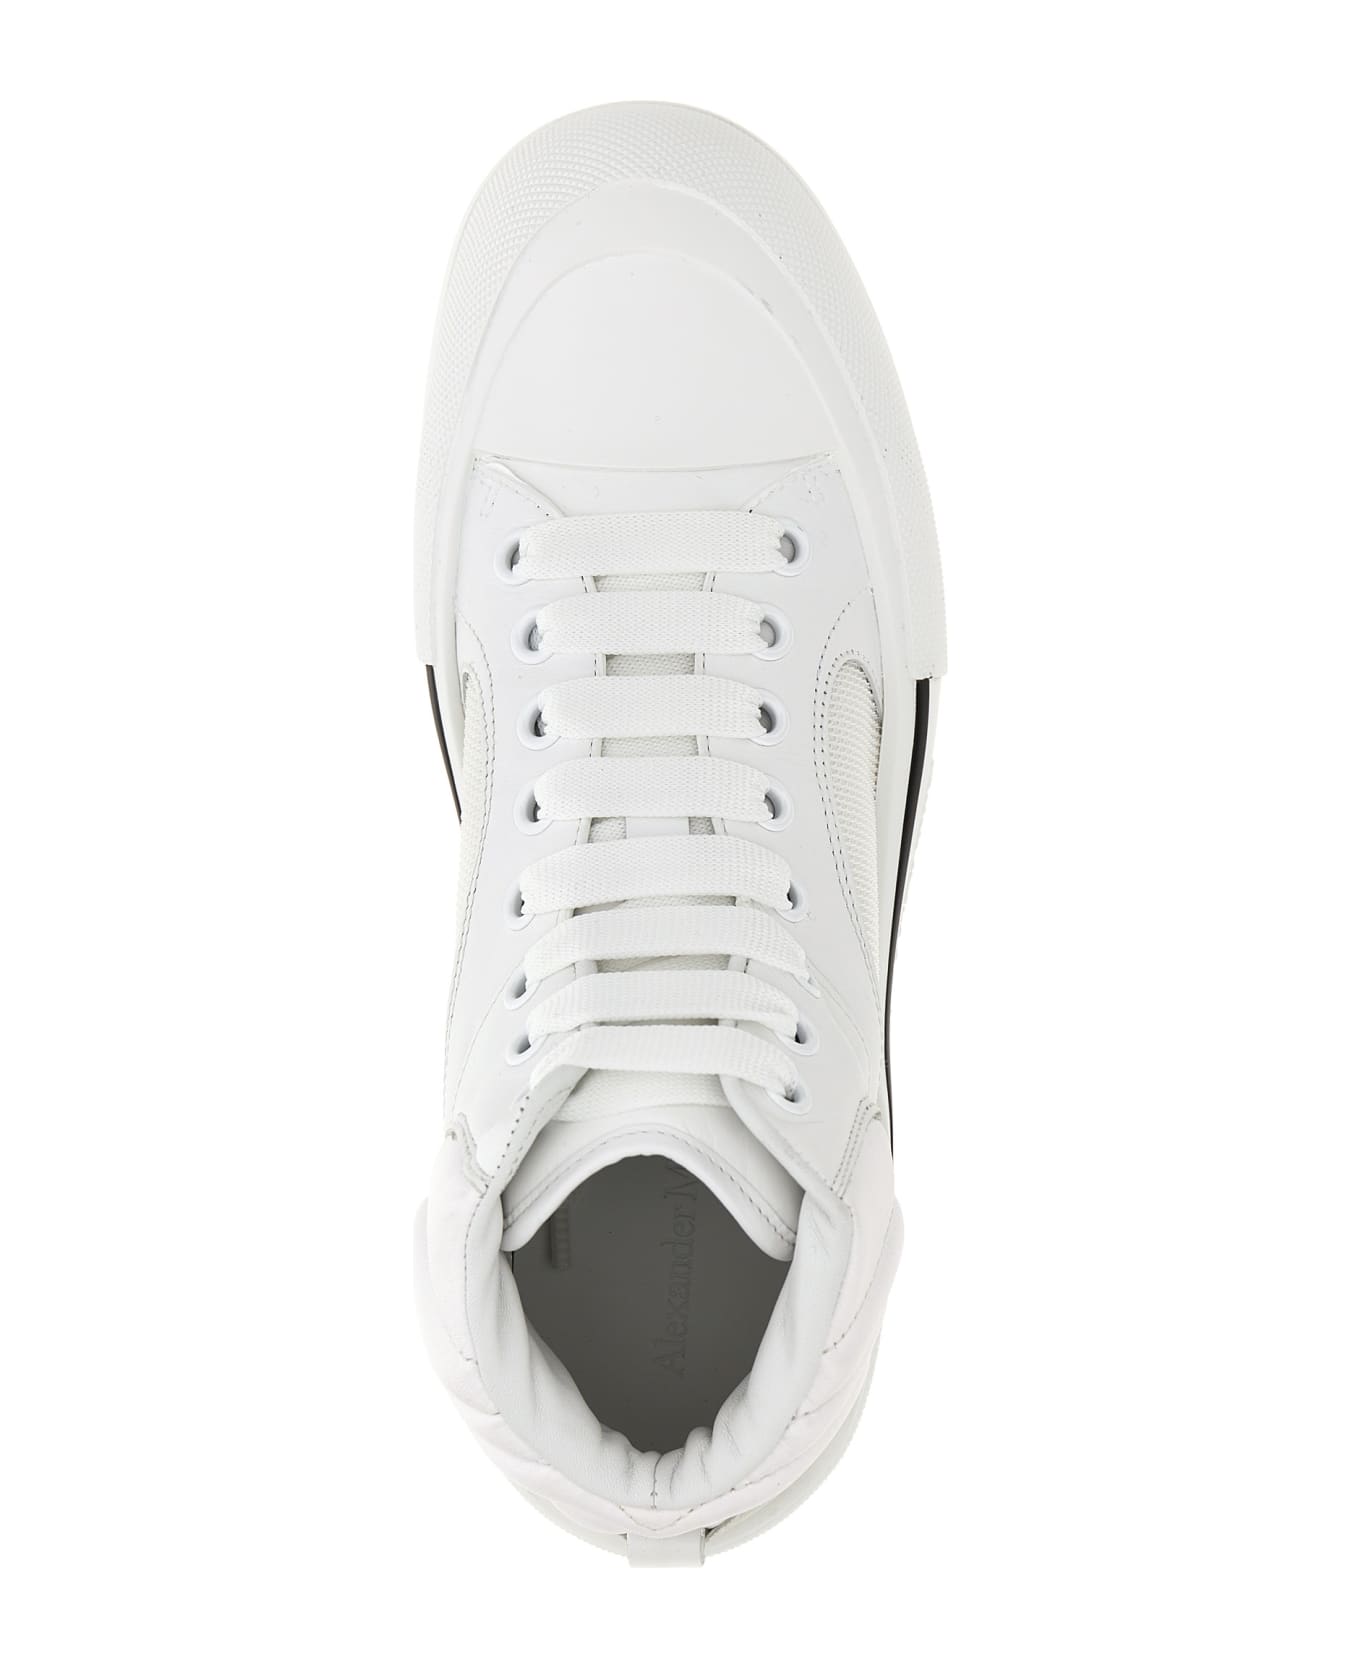 Alexander McQueen 'plimsoll' Sneakers - White スニーカー